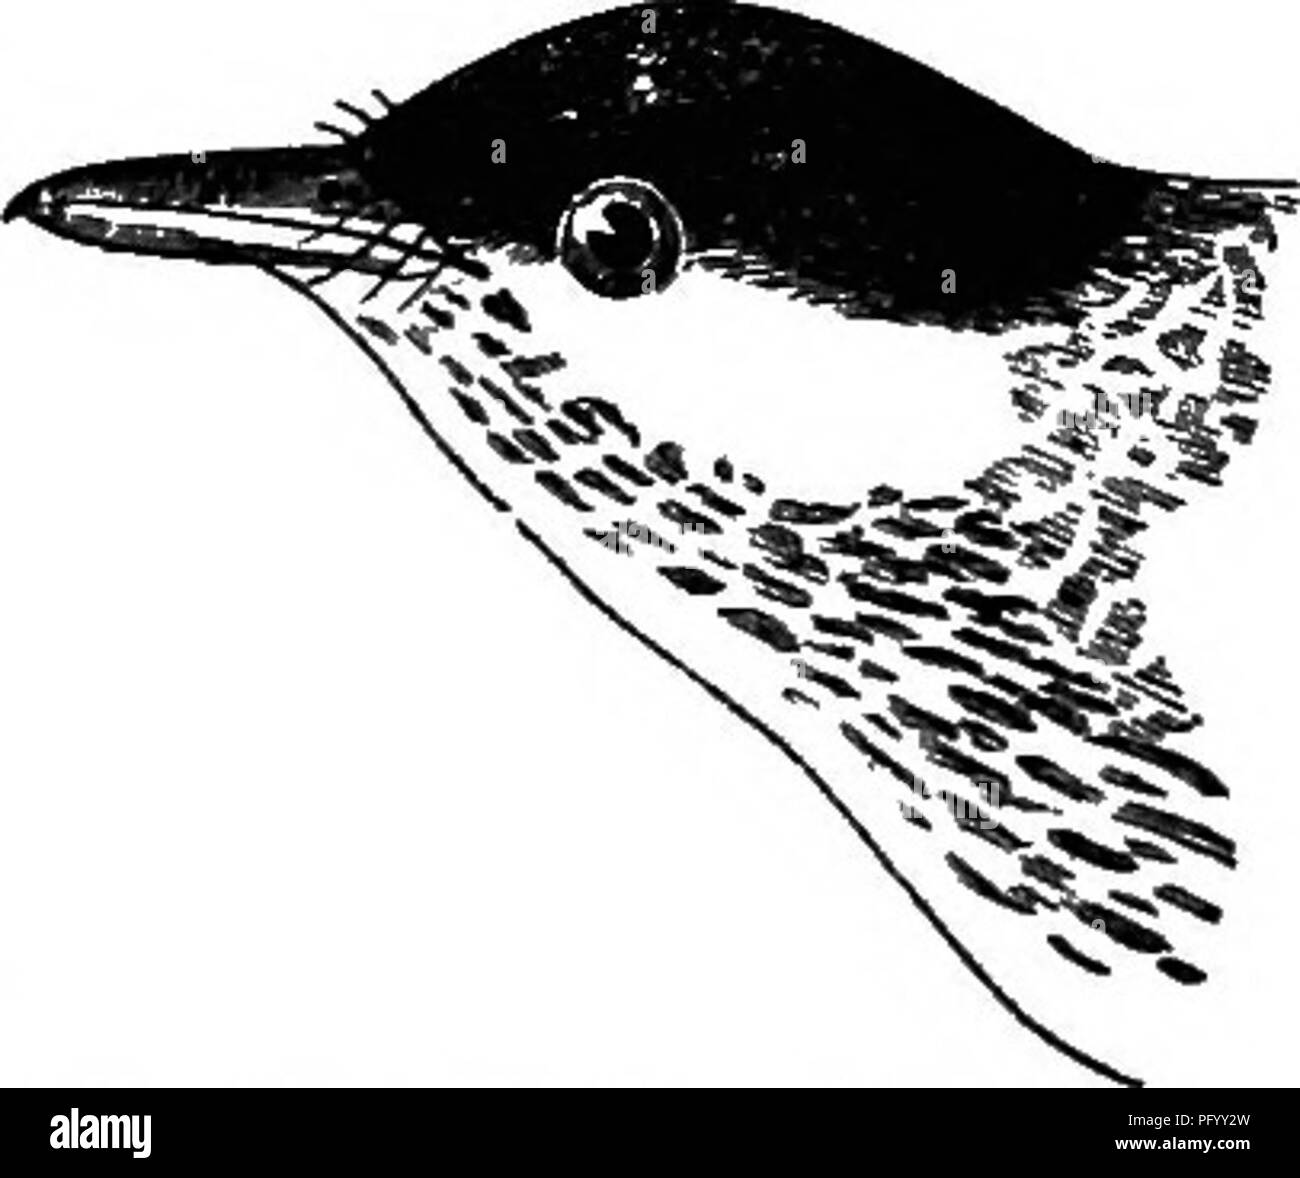 . Aves del Valle Colorado ... científico y popular información sobre ornitología norteamericano;. Las aves. 288 SINONIMIA DE DENDECECA STRIATA negro-poll TVarbler Mnsclcapa Bendrseca striata striata, Forst Philos. Trans. 1772,406,4-38 IxiL, n. 31 (Severn Eiver).-(JM. S. N. i. 1788, 930, n. 7 (de Forster; también qaotea MiJK. Mal pL 15, A. B.).-list n. 10. ii. 1790, 481, n. 56 (desde Forster; Qui&GT;teB alao Flycatcher seccionado, Penn. A. Z. 11 390, y listones. SjD. ii. pt. i. 349).-Turt. Sif. i. Steph 1806,571. Gen. ZooL x. 1817,370. UotsclUa striata, GM. SX. 1. 1788, 97FI, u. 194 (negro-poU W Foto de stock